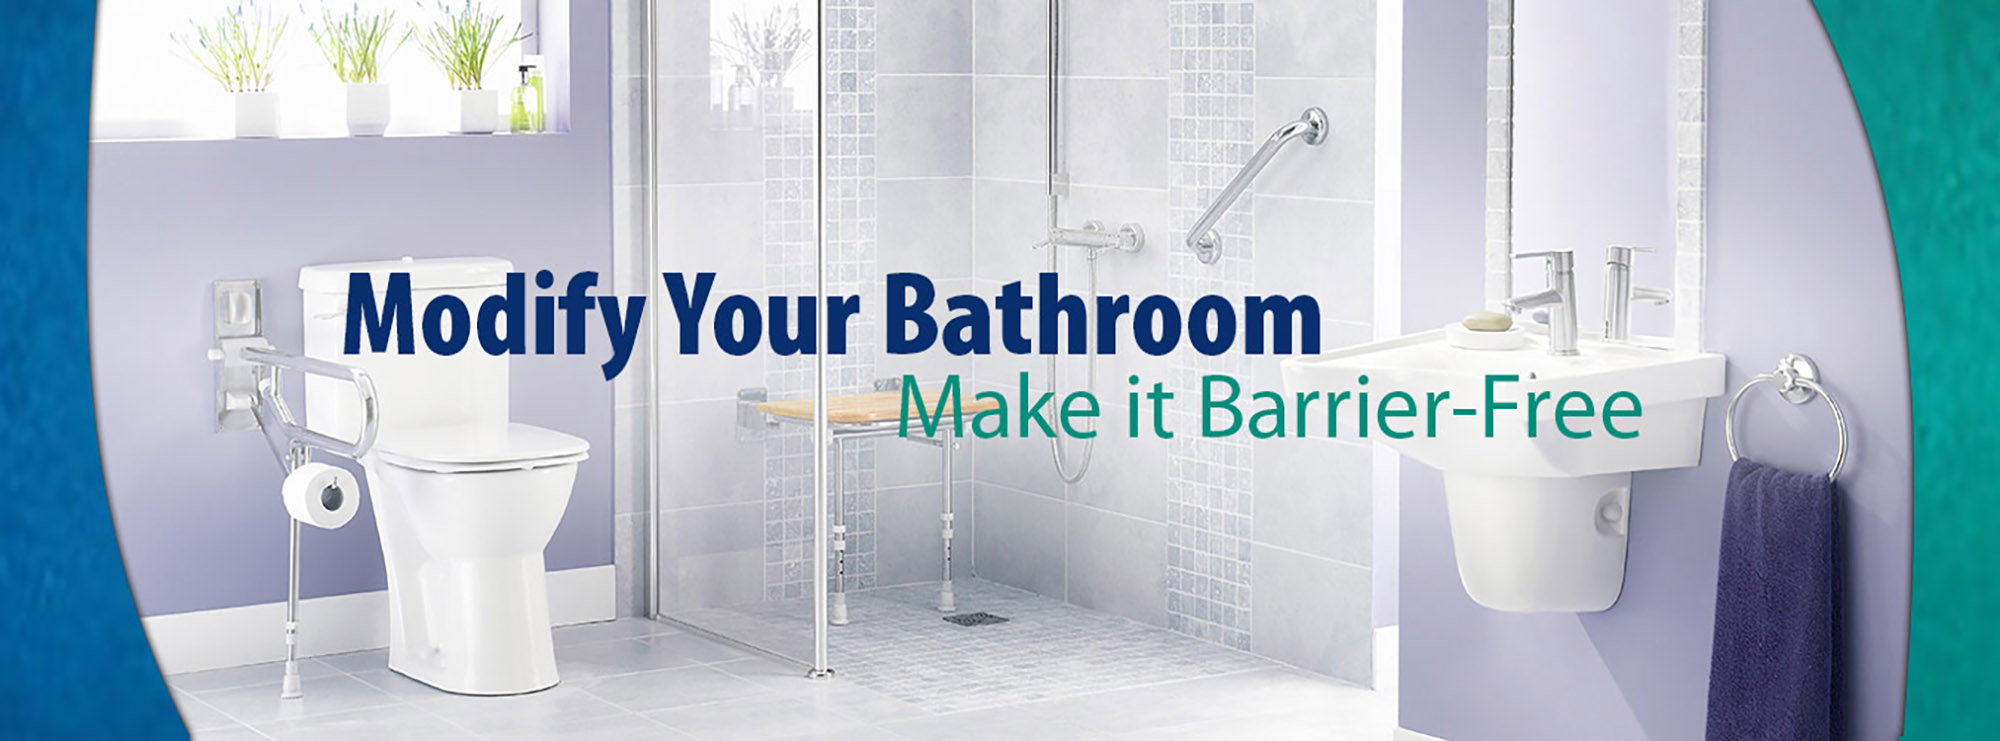 Modify your Bathroom - Make it Barrier Free